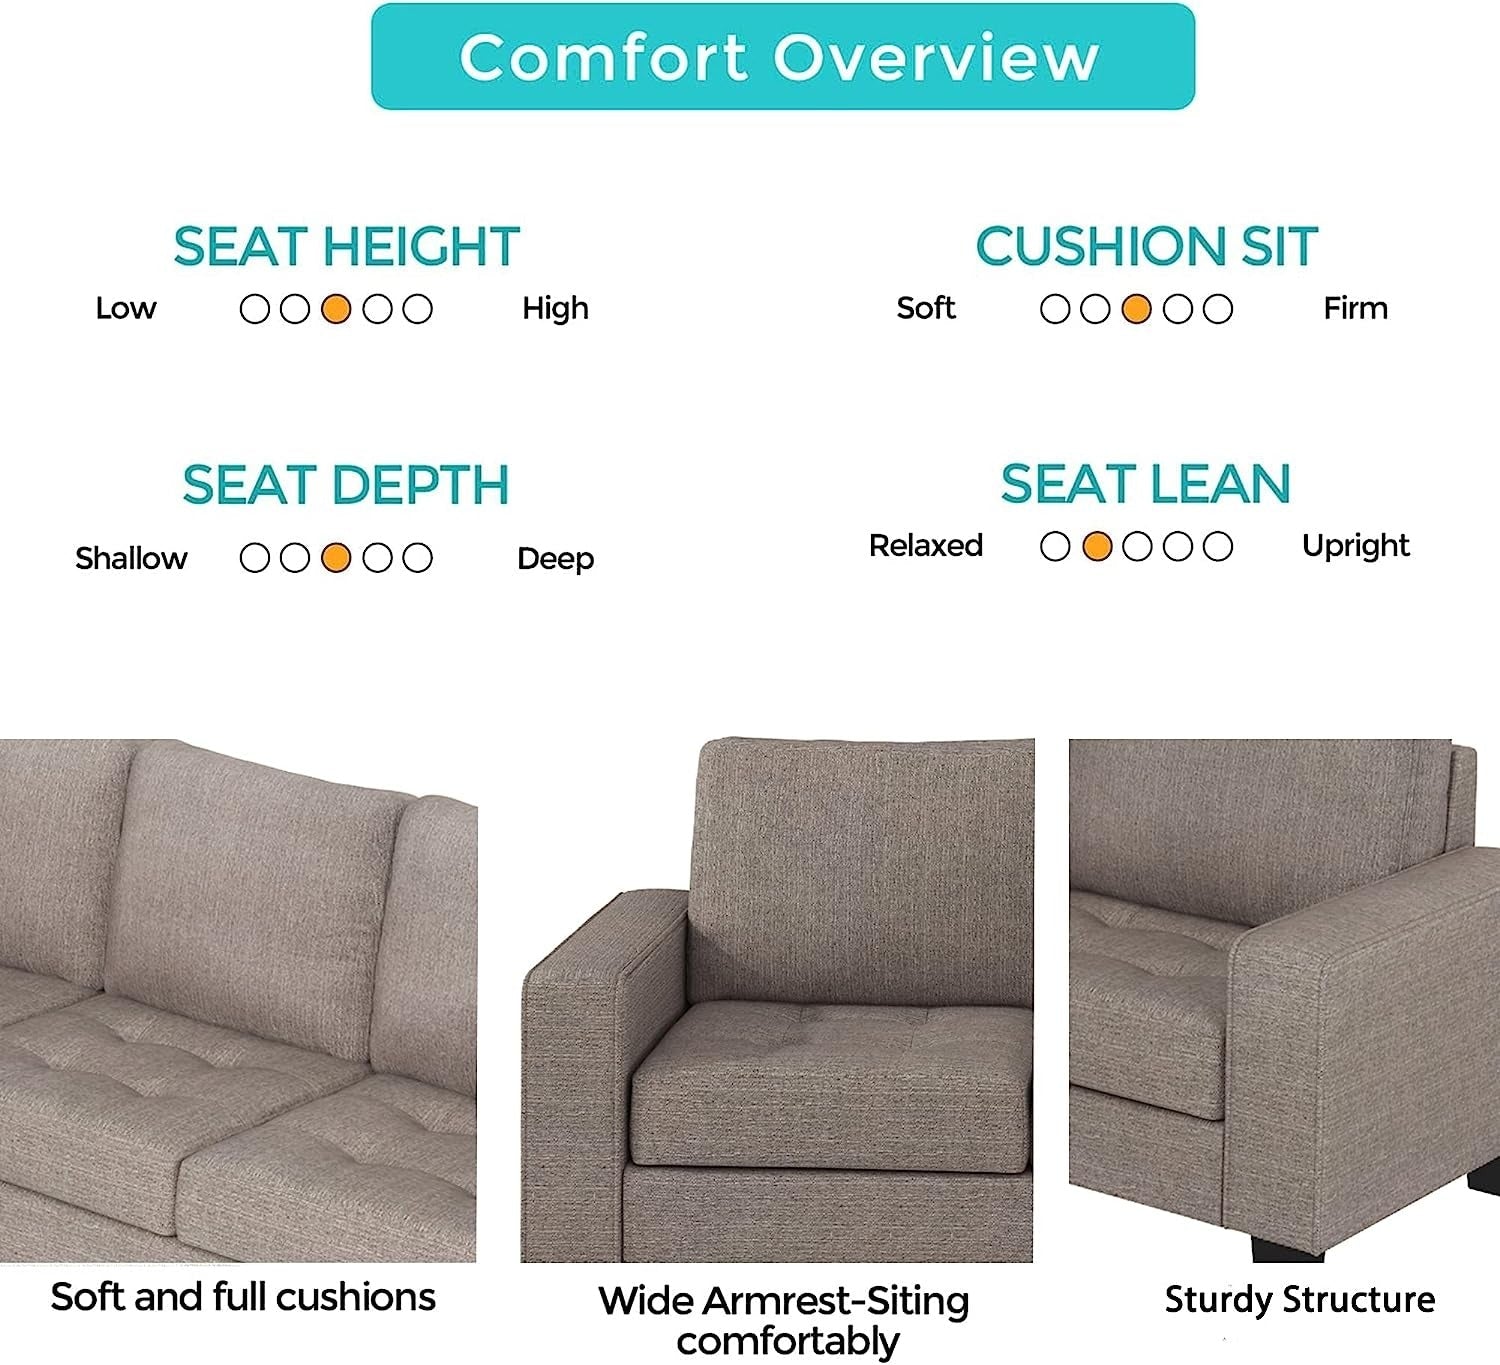 Christopher 5 Seater L Shape Premium Fabric Sofa With Ottoman - Torque India